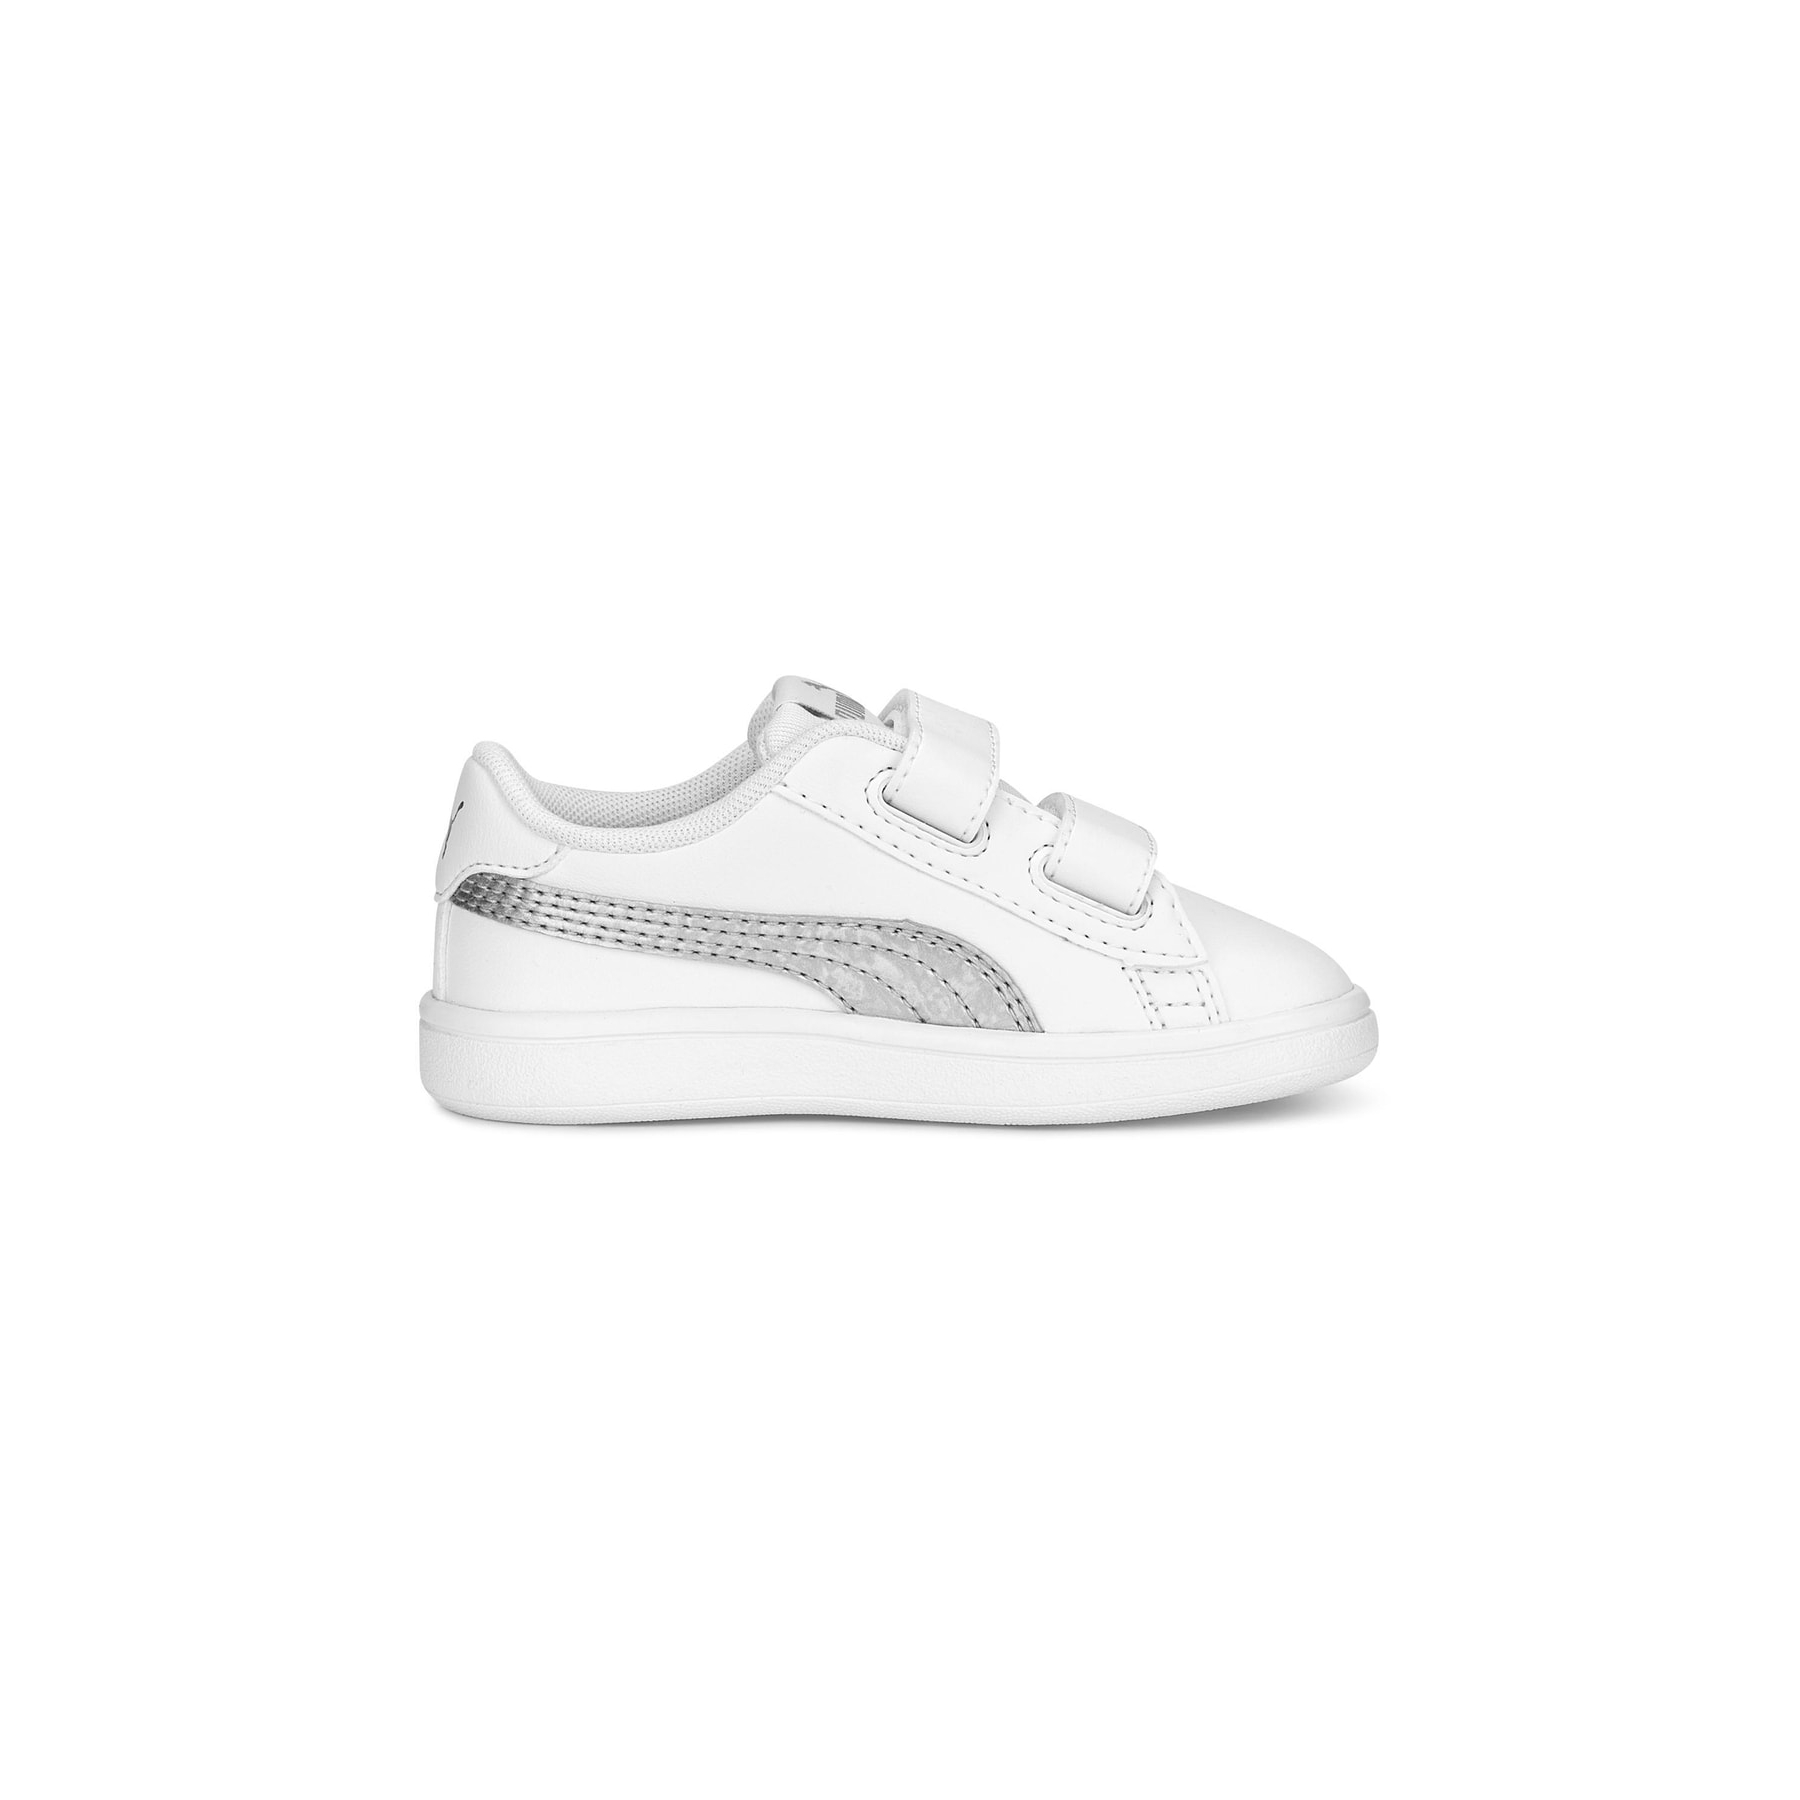 Puma Smash V2 Metallics Beyaz Spor Ayakkabı (389684-01)